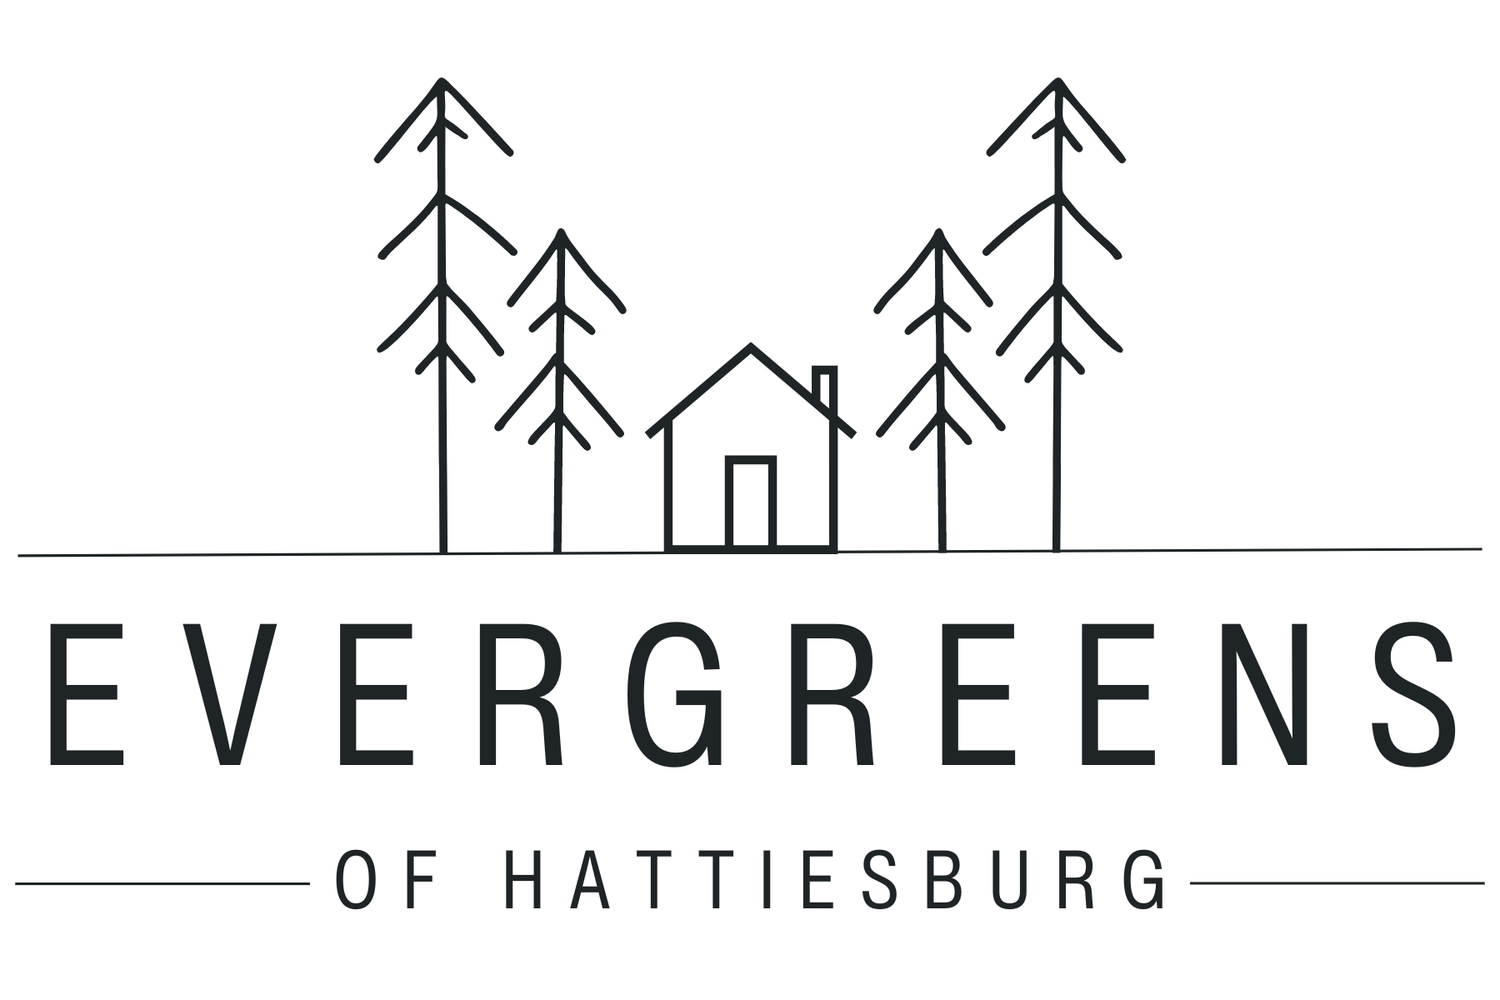 The Evergreens of Hattiesburg